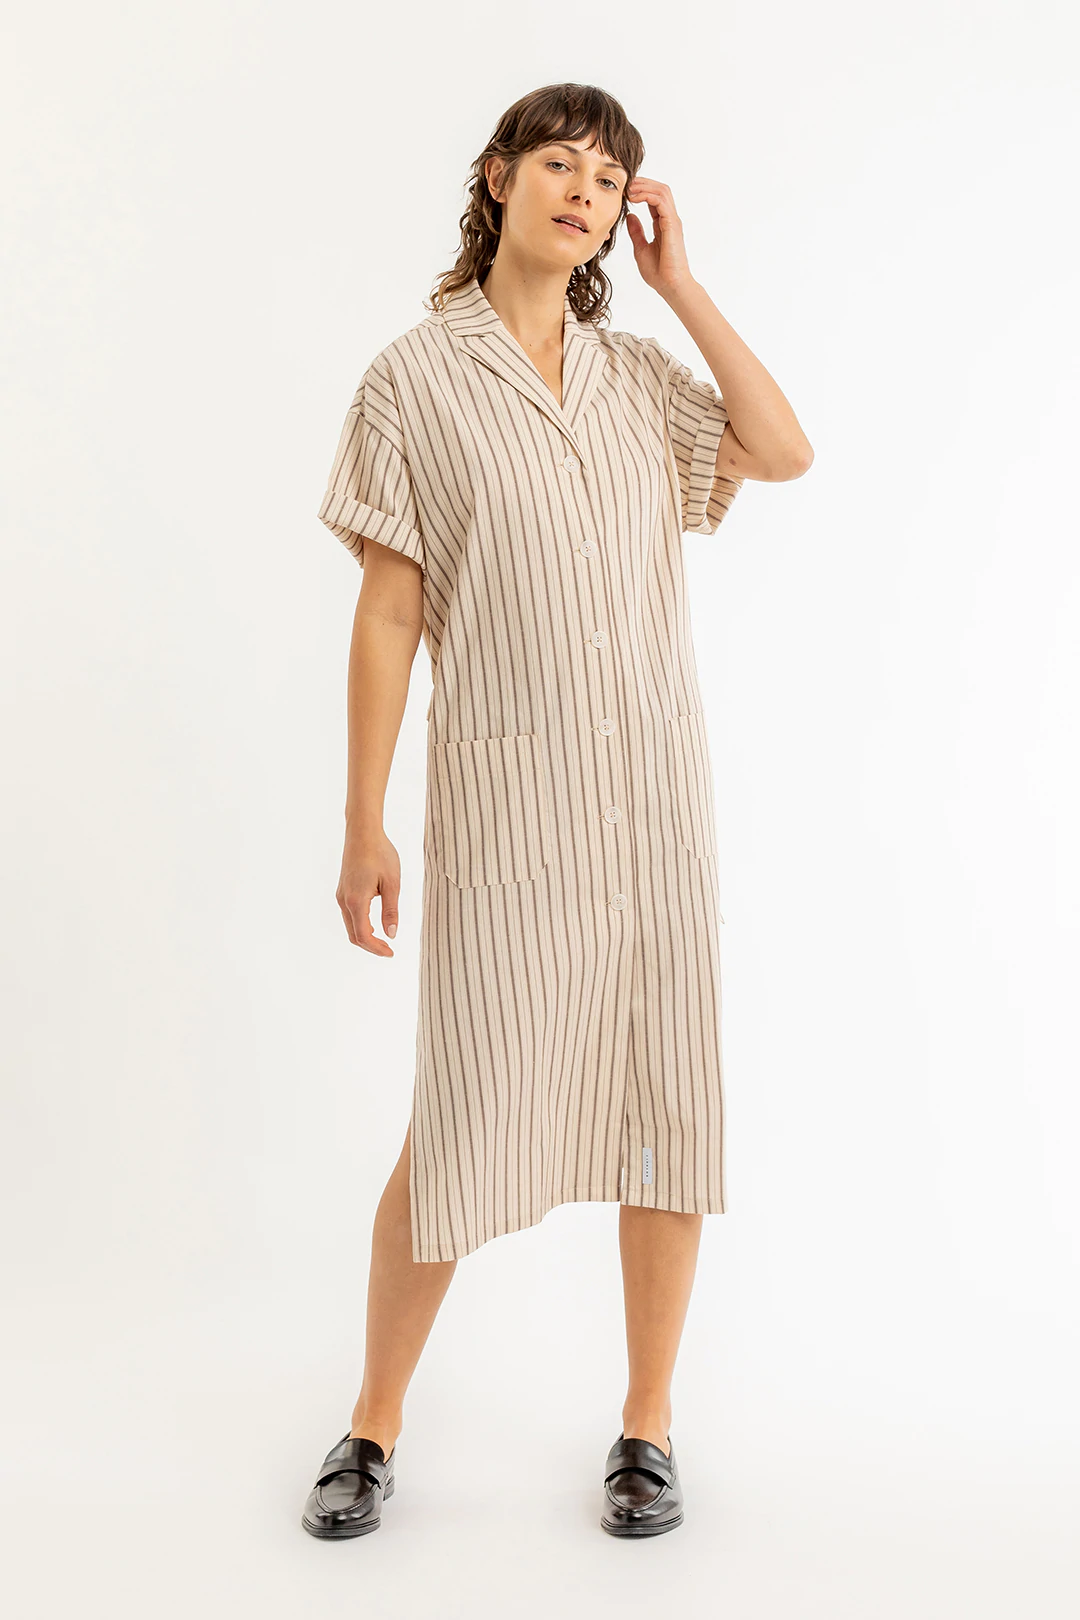 ROTHOLZ Bowling Shirt Dress oatmeal stripe L